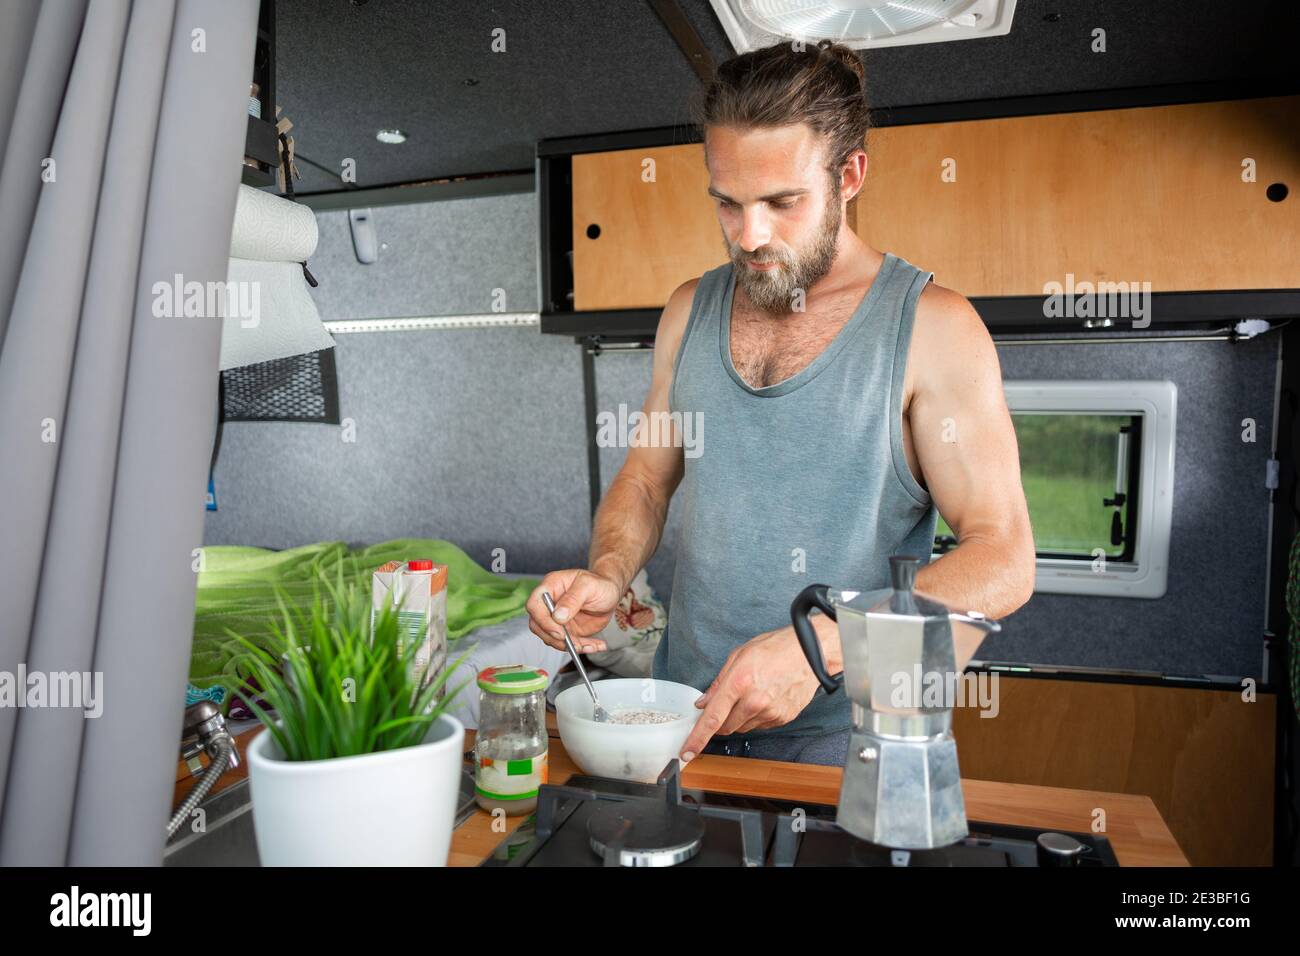 Man preparing cereal inside a camper van Stock Photo